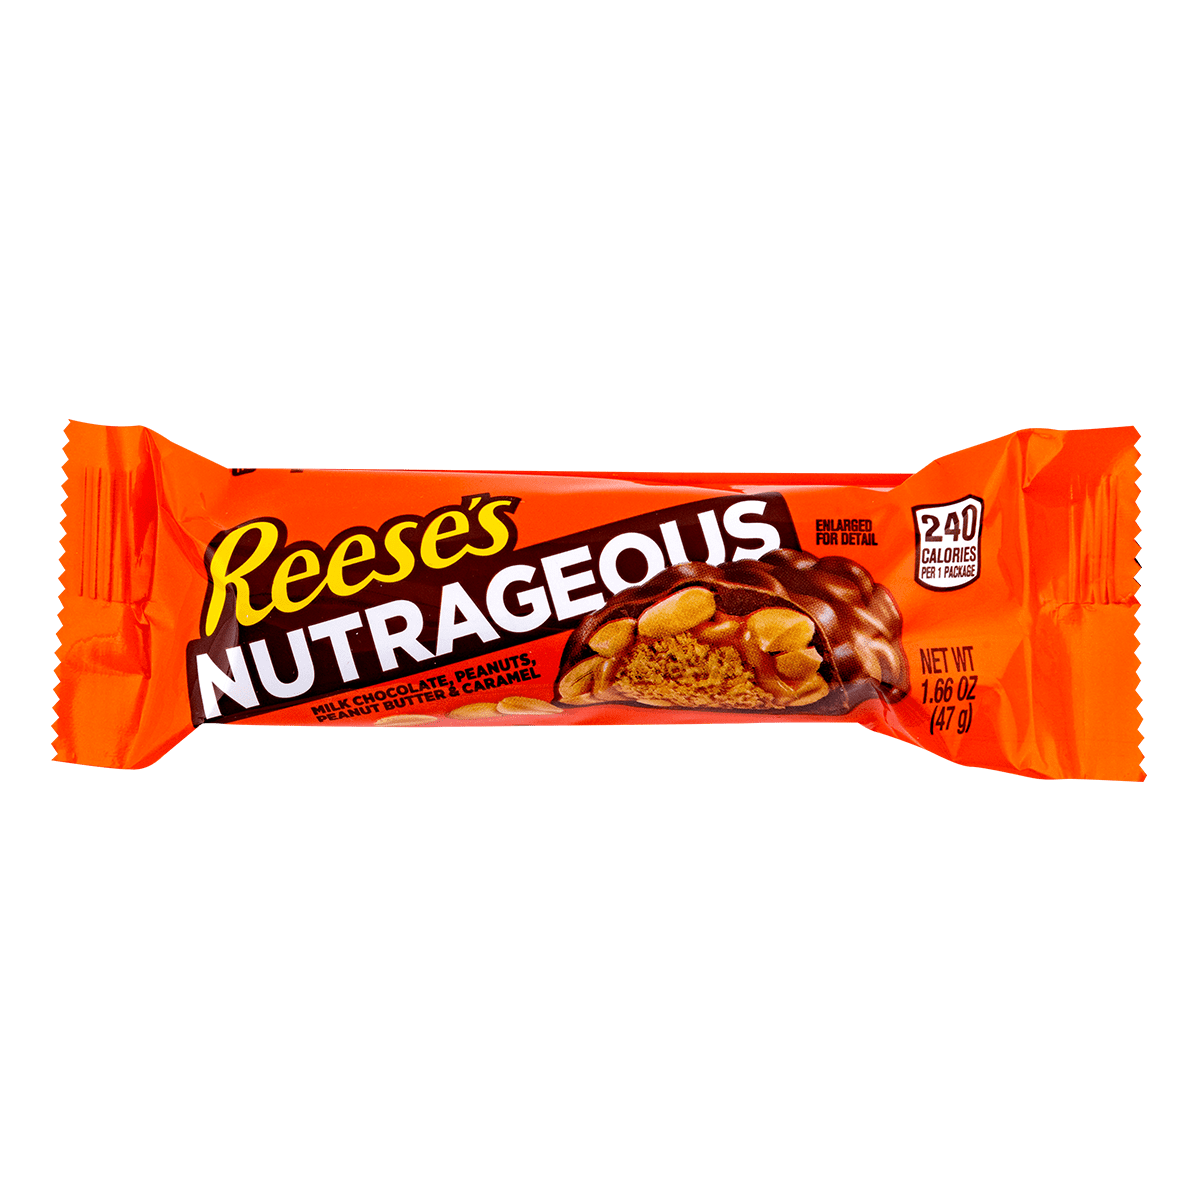 Reese’s Nutrageous Milk Chocolate Peanuts Peanut Butter & Caramel - 47g